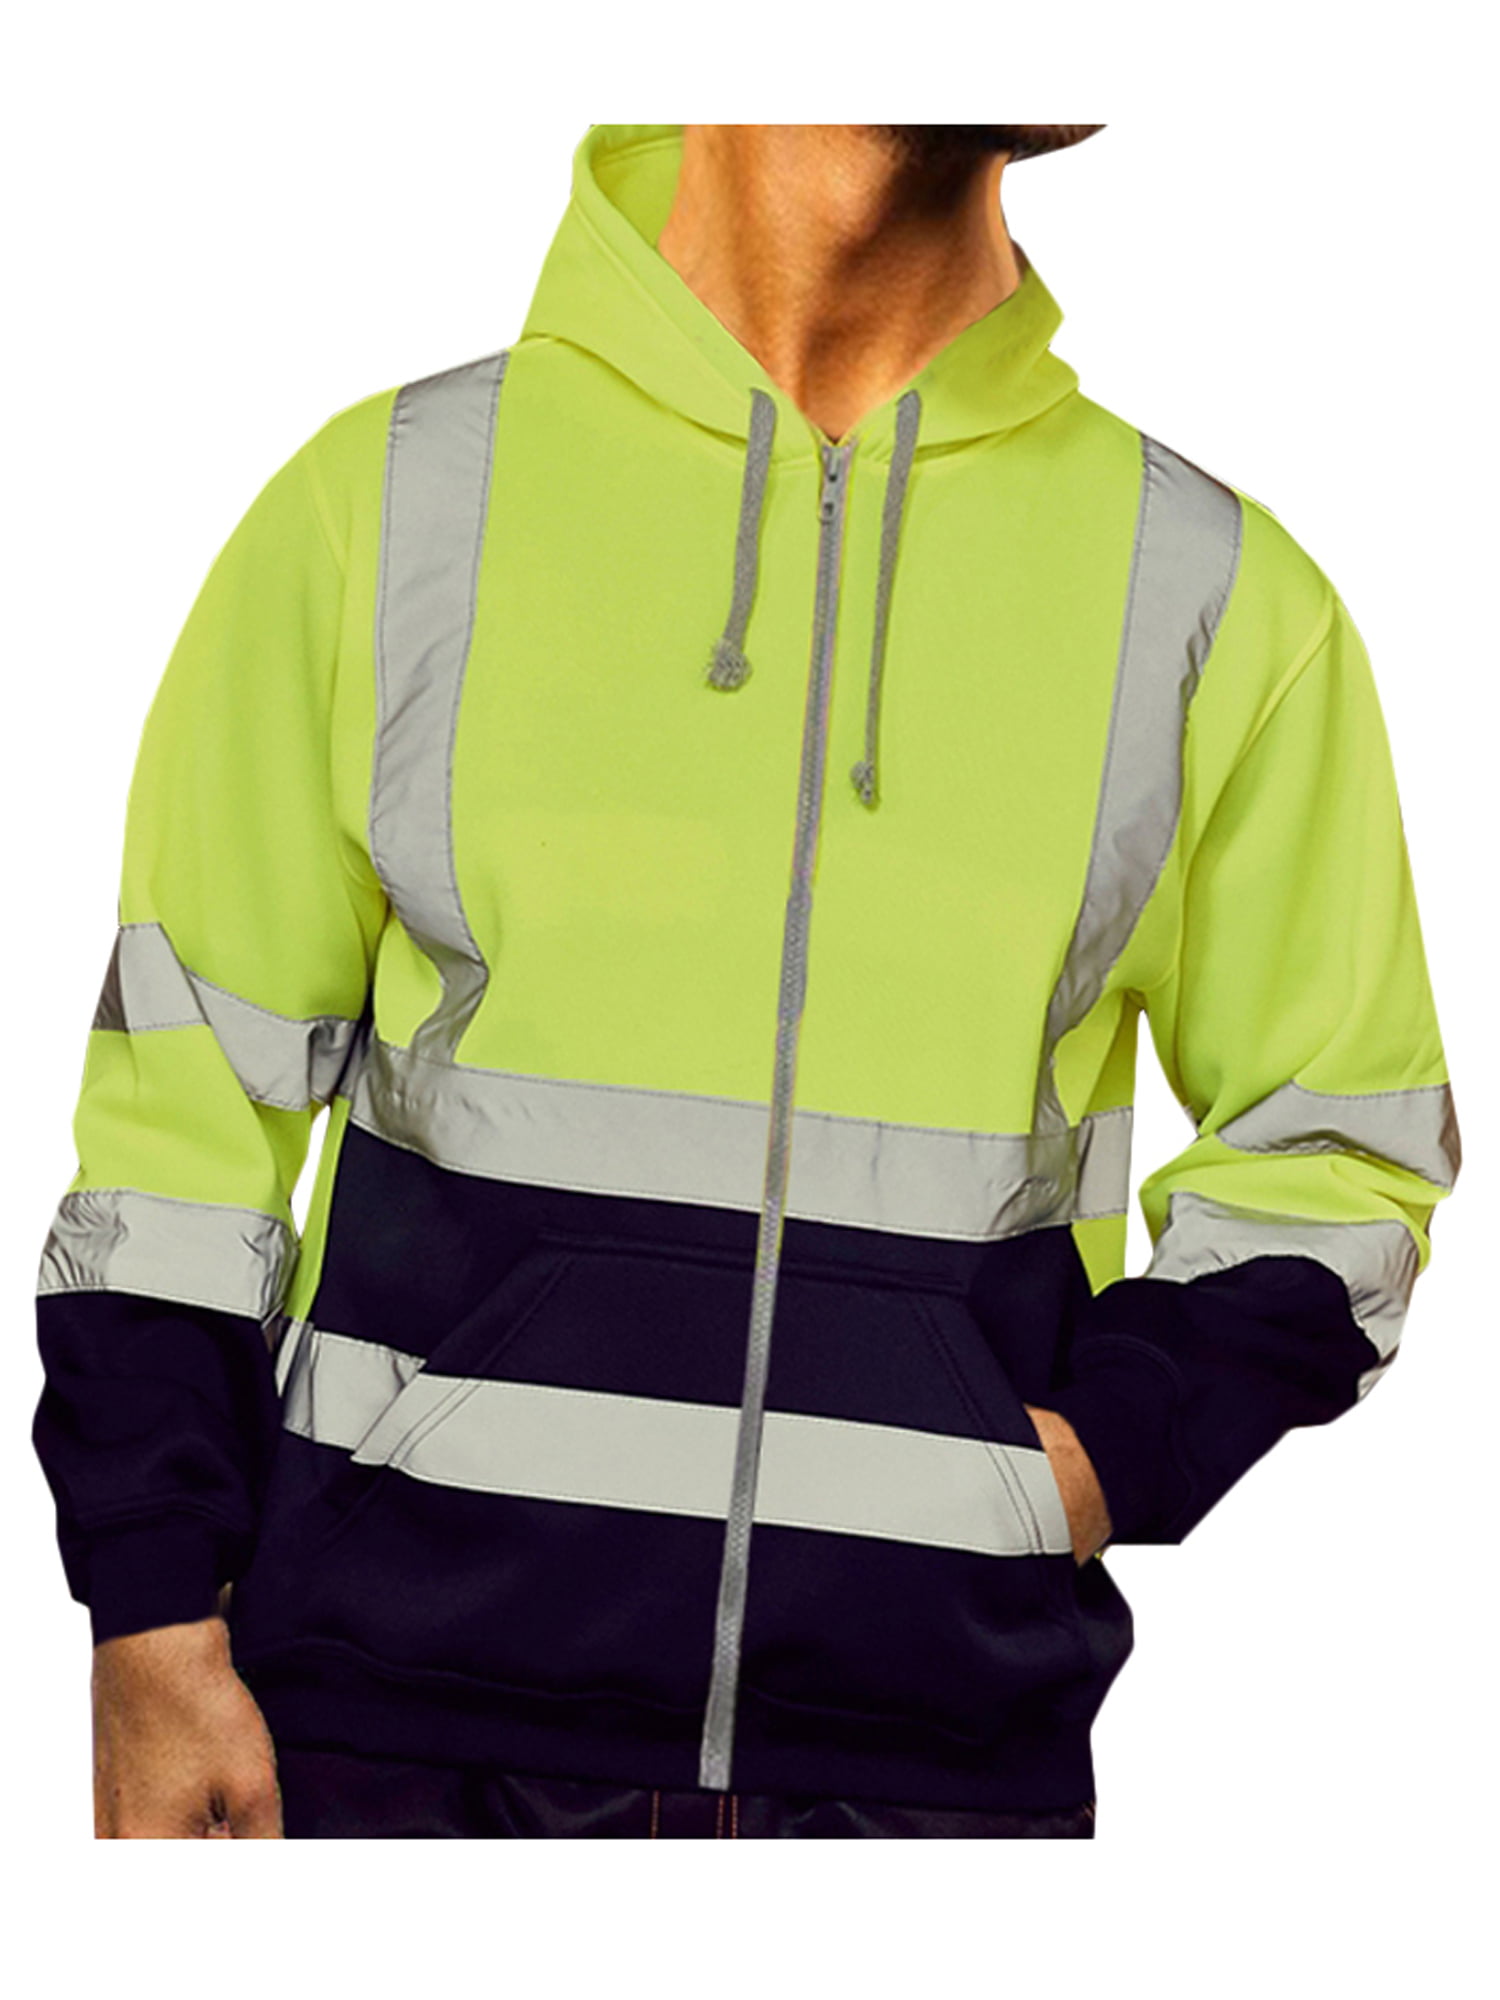 Mens Premium Hi Viz High Visibility Pro Work Safety Lined Fleece Warm Zip Jacket 